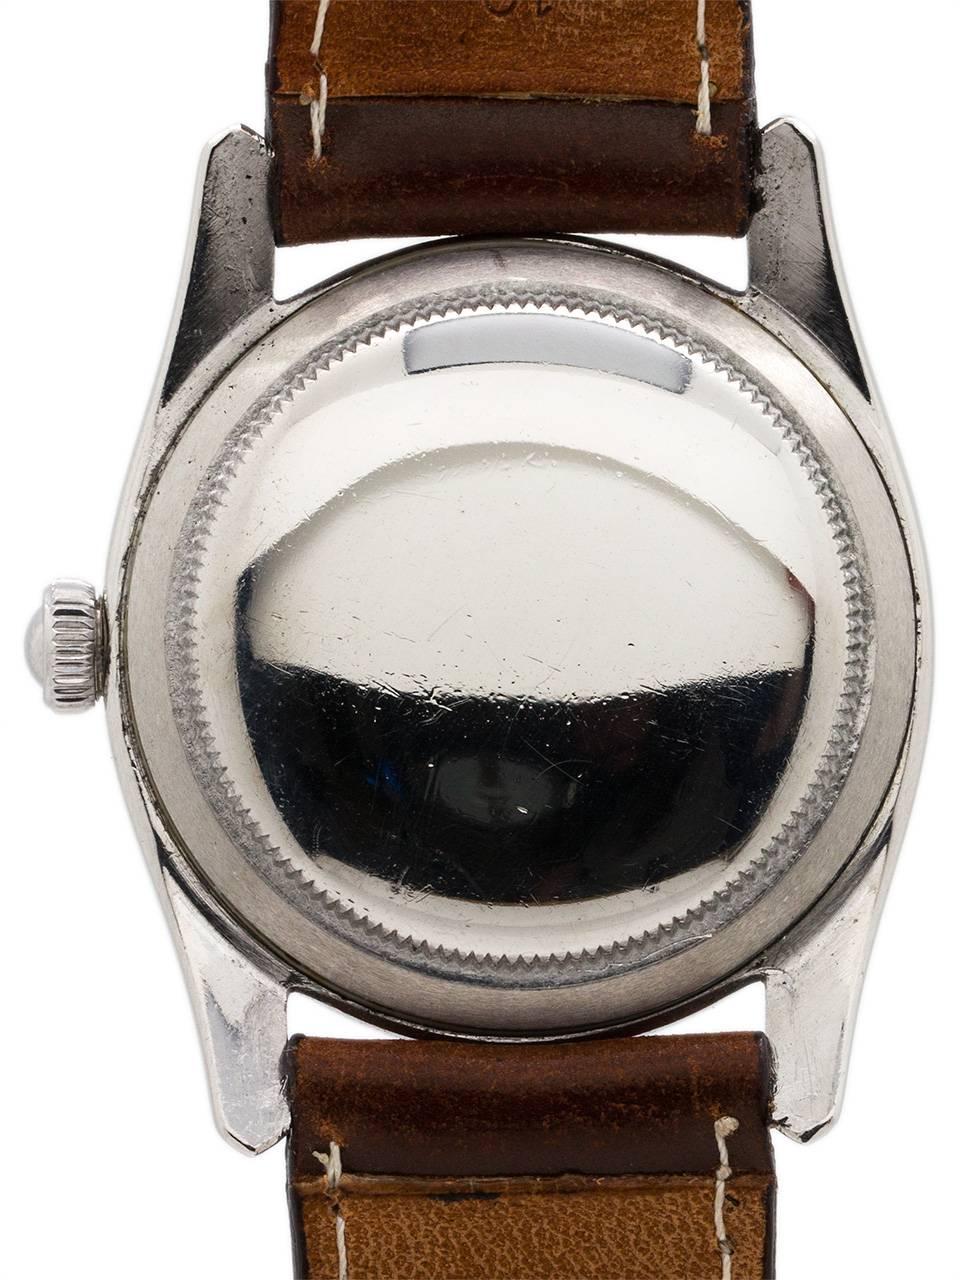 Men's Rolex Stainless Steel Bombe self winding wristwatch Ref 5018, circa 1948